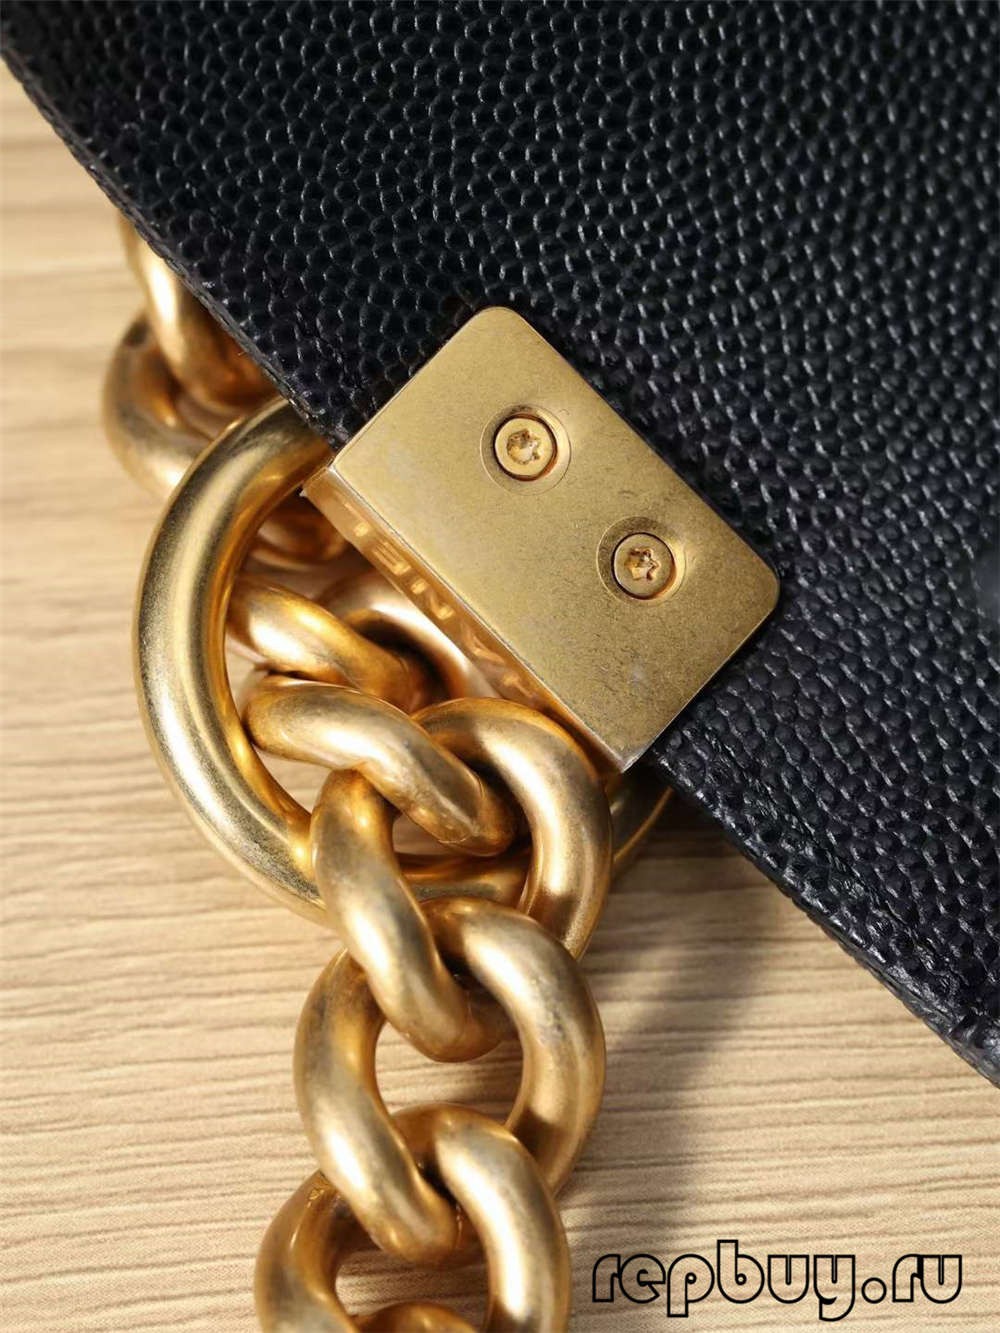 Chanel Le boy top replica handbags medium gold buckle leather and hardware details (2022 Updated)-Best Quality Fake designer Bag Review, Replica designer bag ru